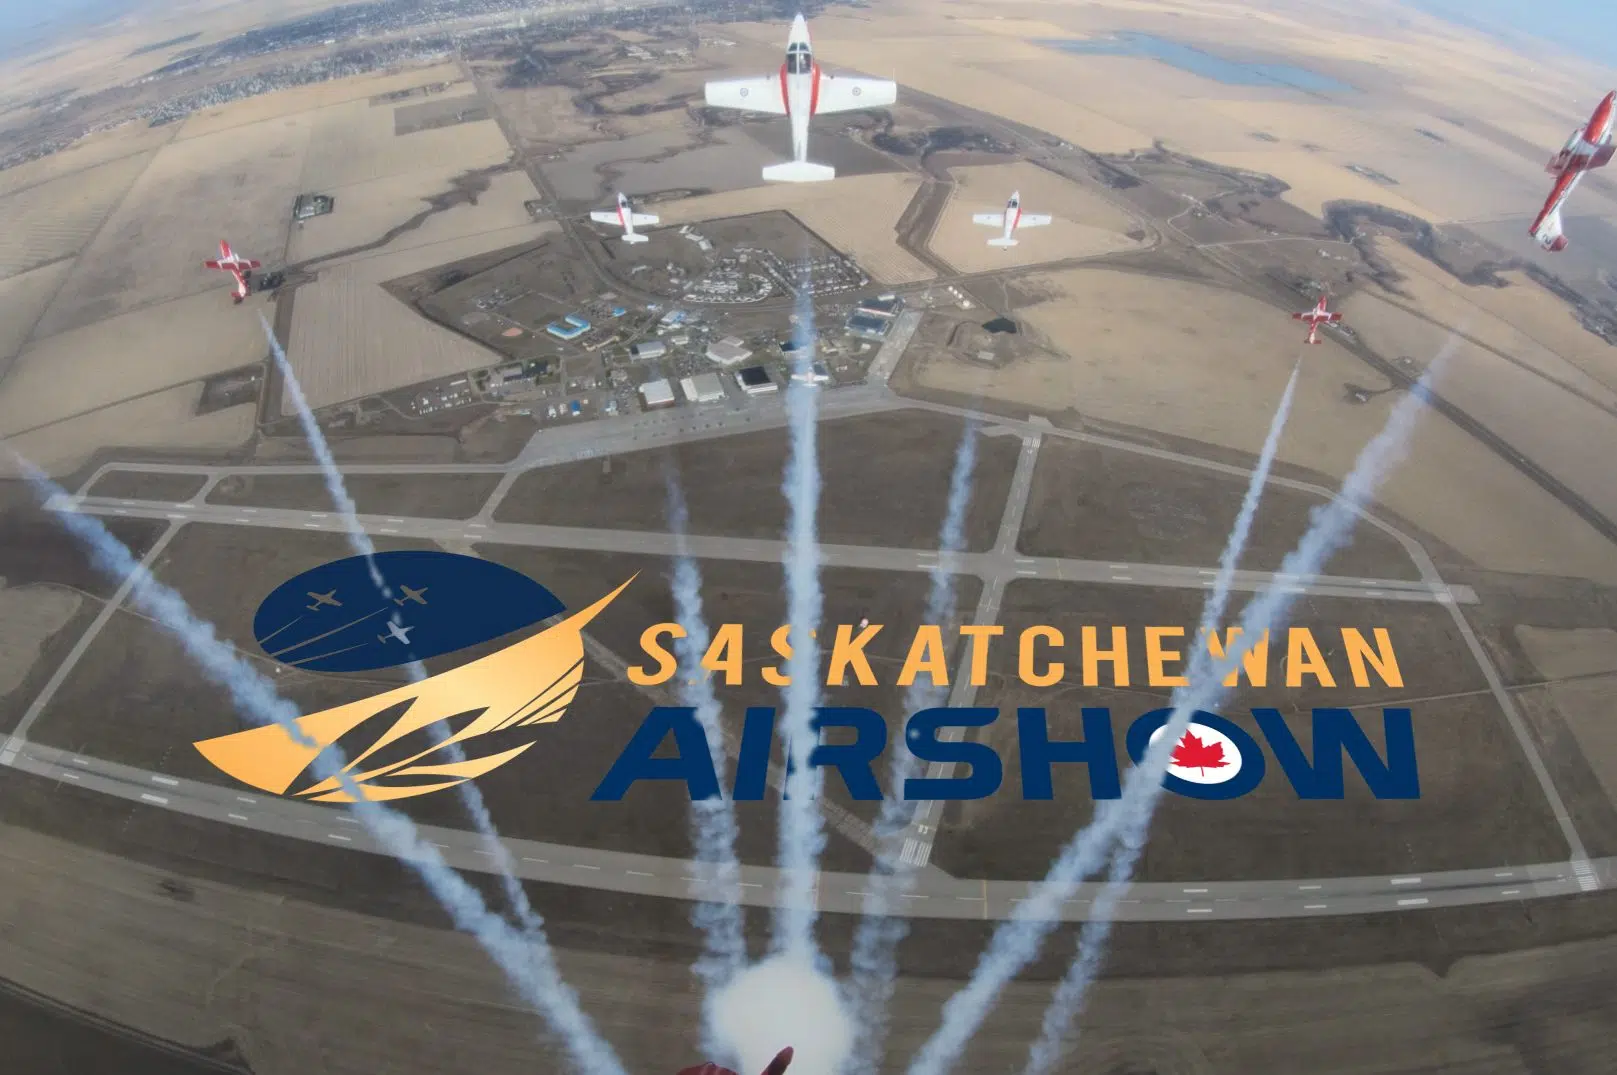 Saskatchewan Airshow takes to the skies in July